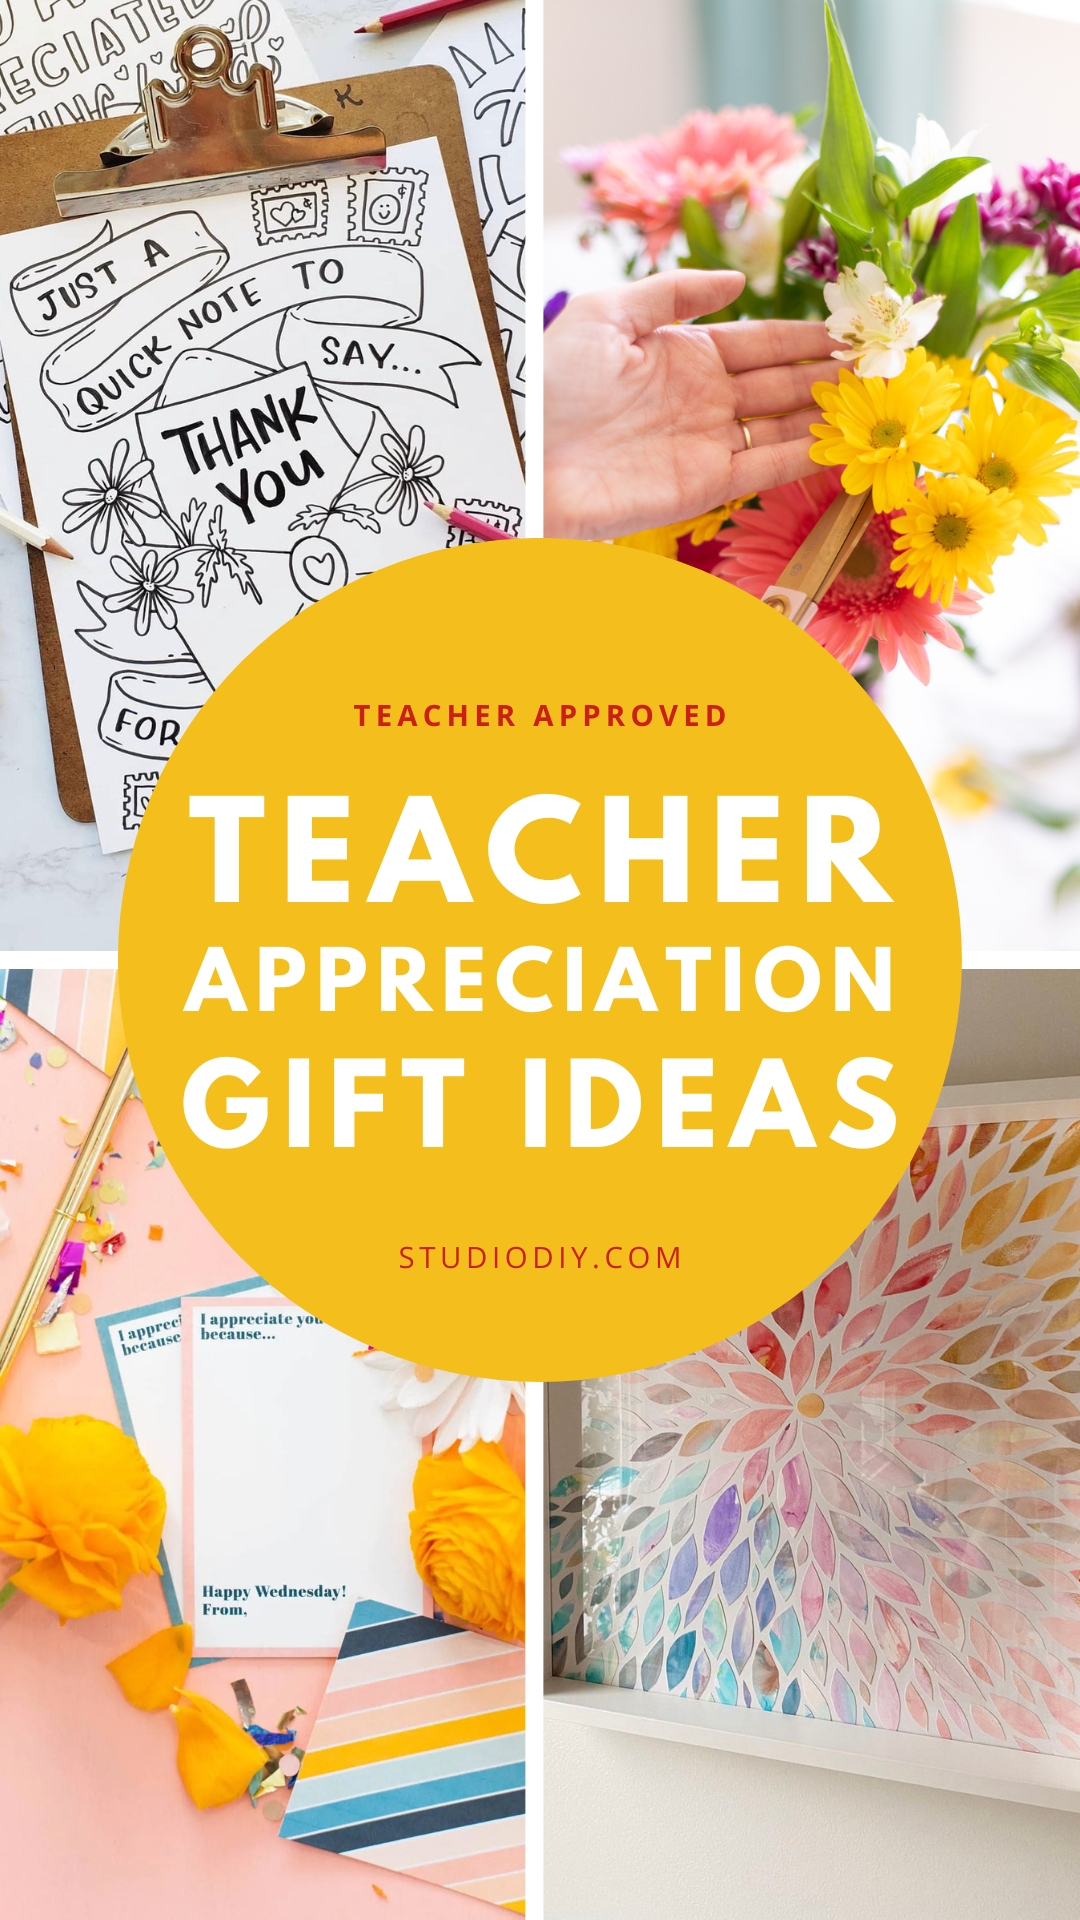 2023 Gift Guide: Best Teacher Gifts